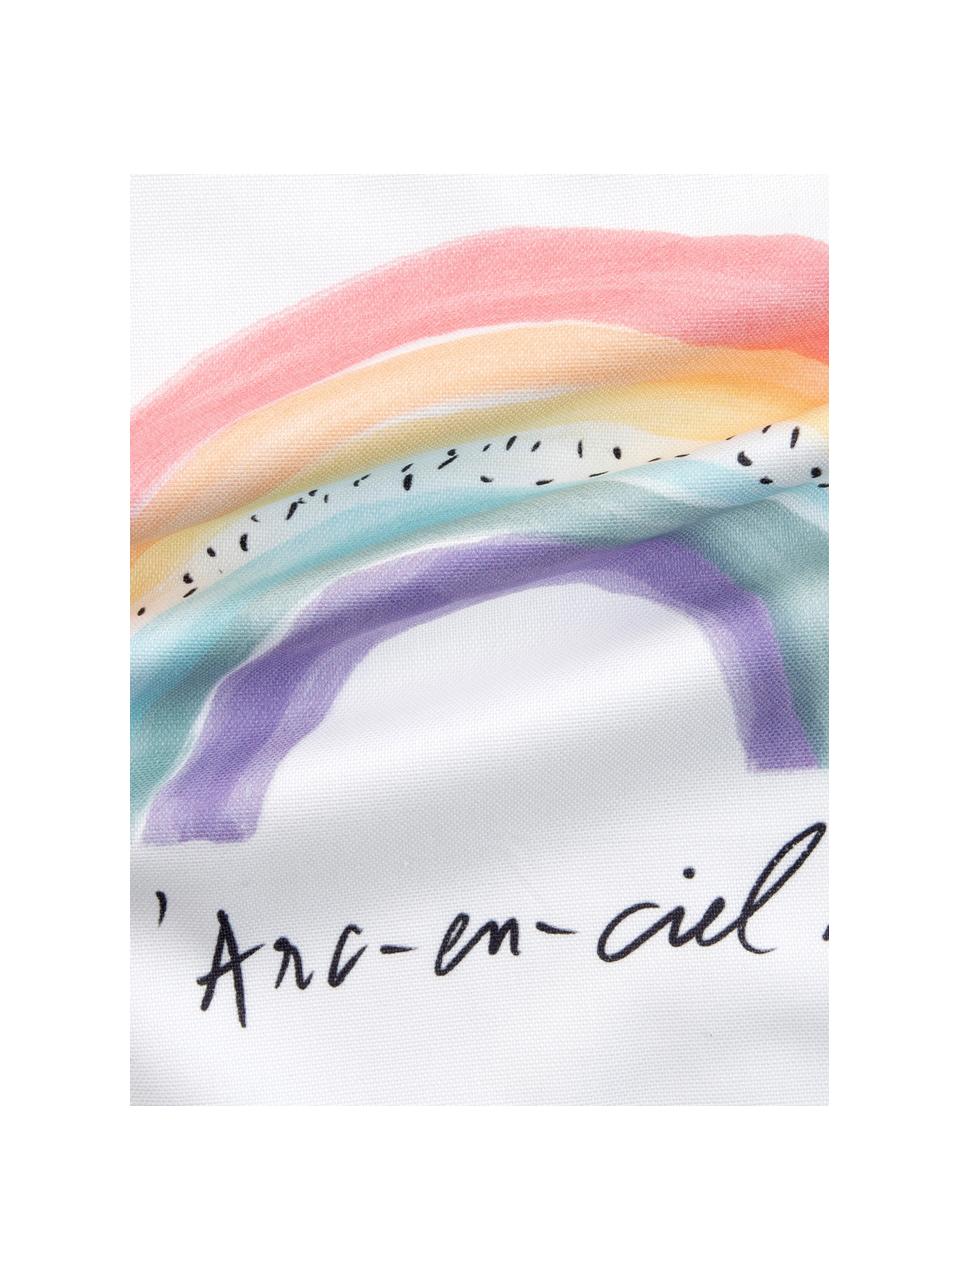 Designový povlak na polštář Rainbow od Kery Till, Bílá, více barev